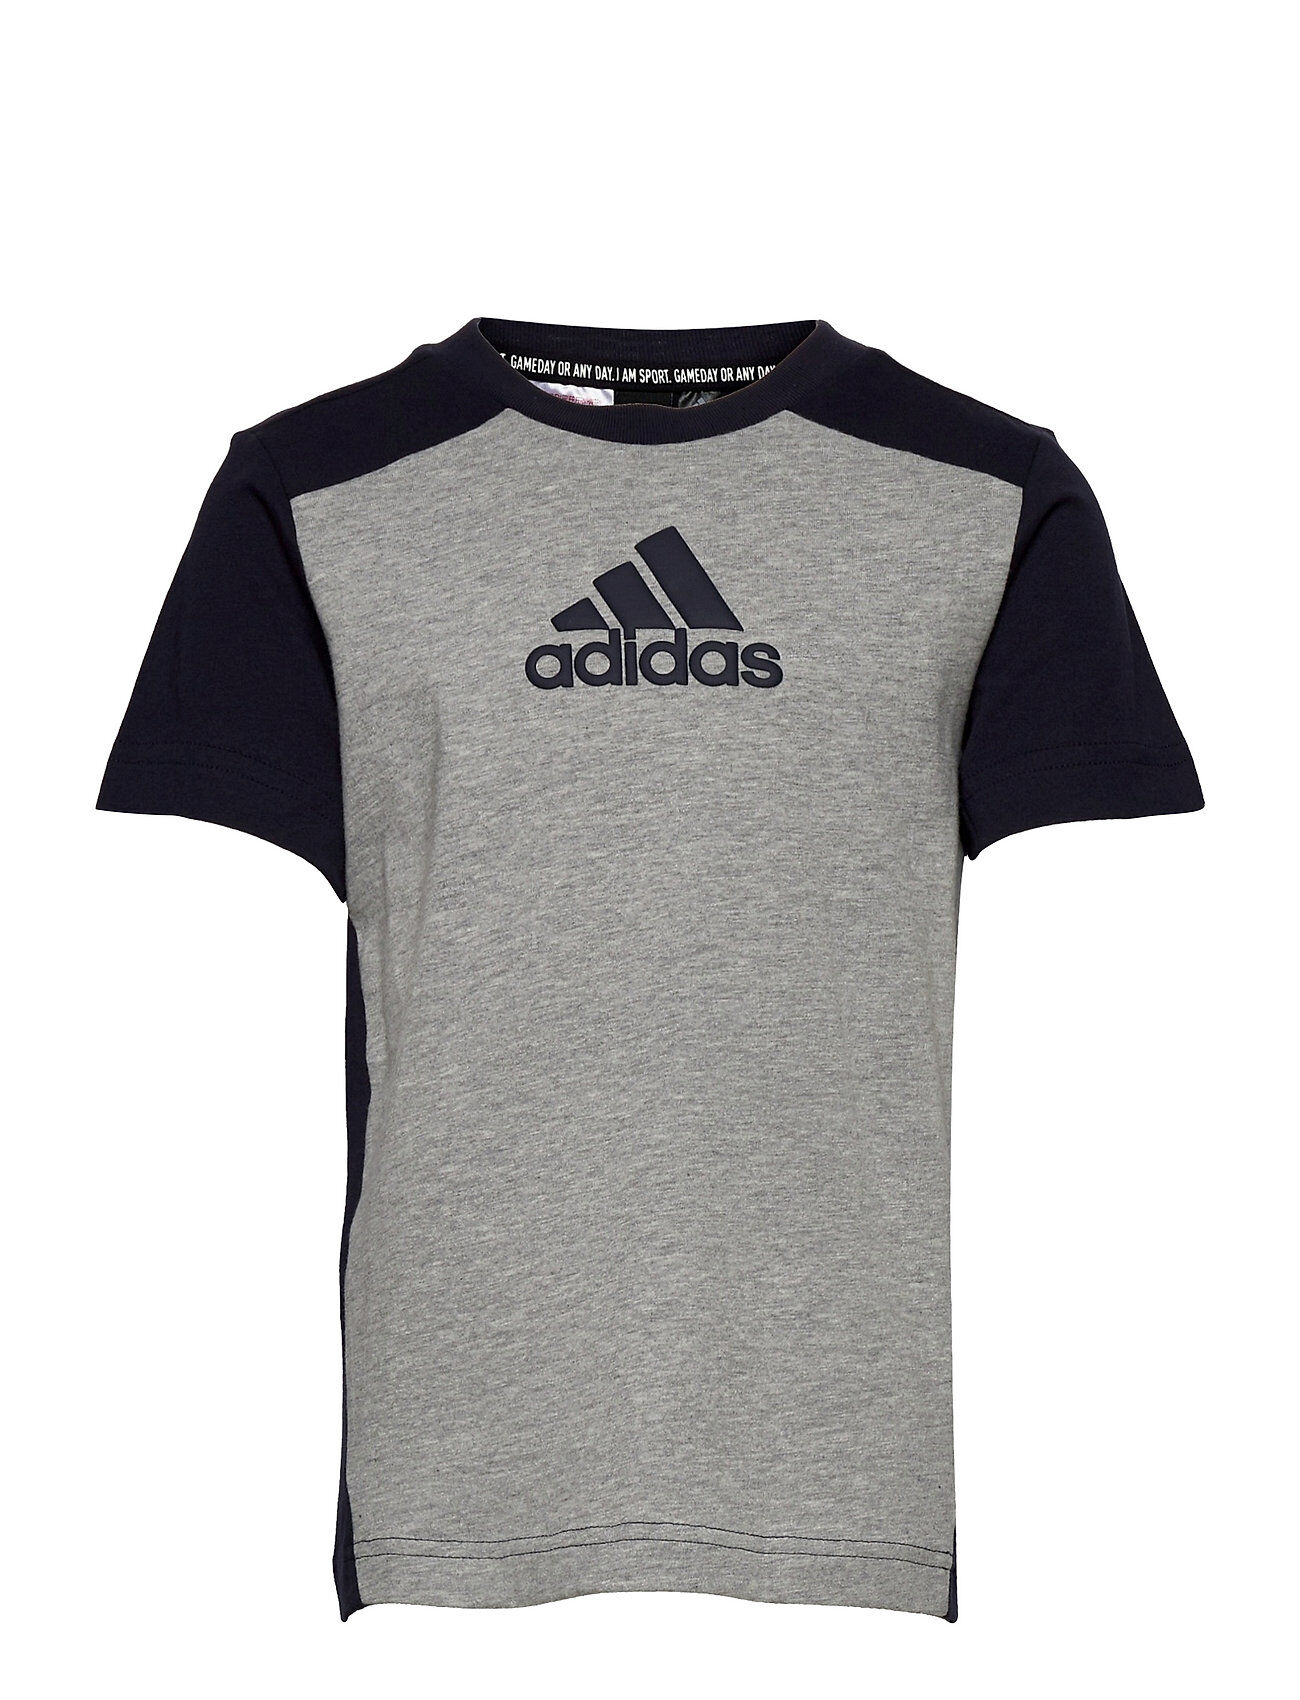 adidas Performance Logo Tee T-shirts Short-sleeved Grå Adidas Performance